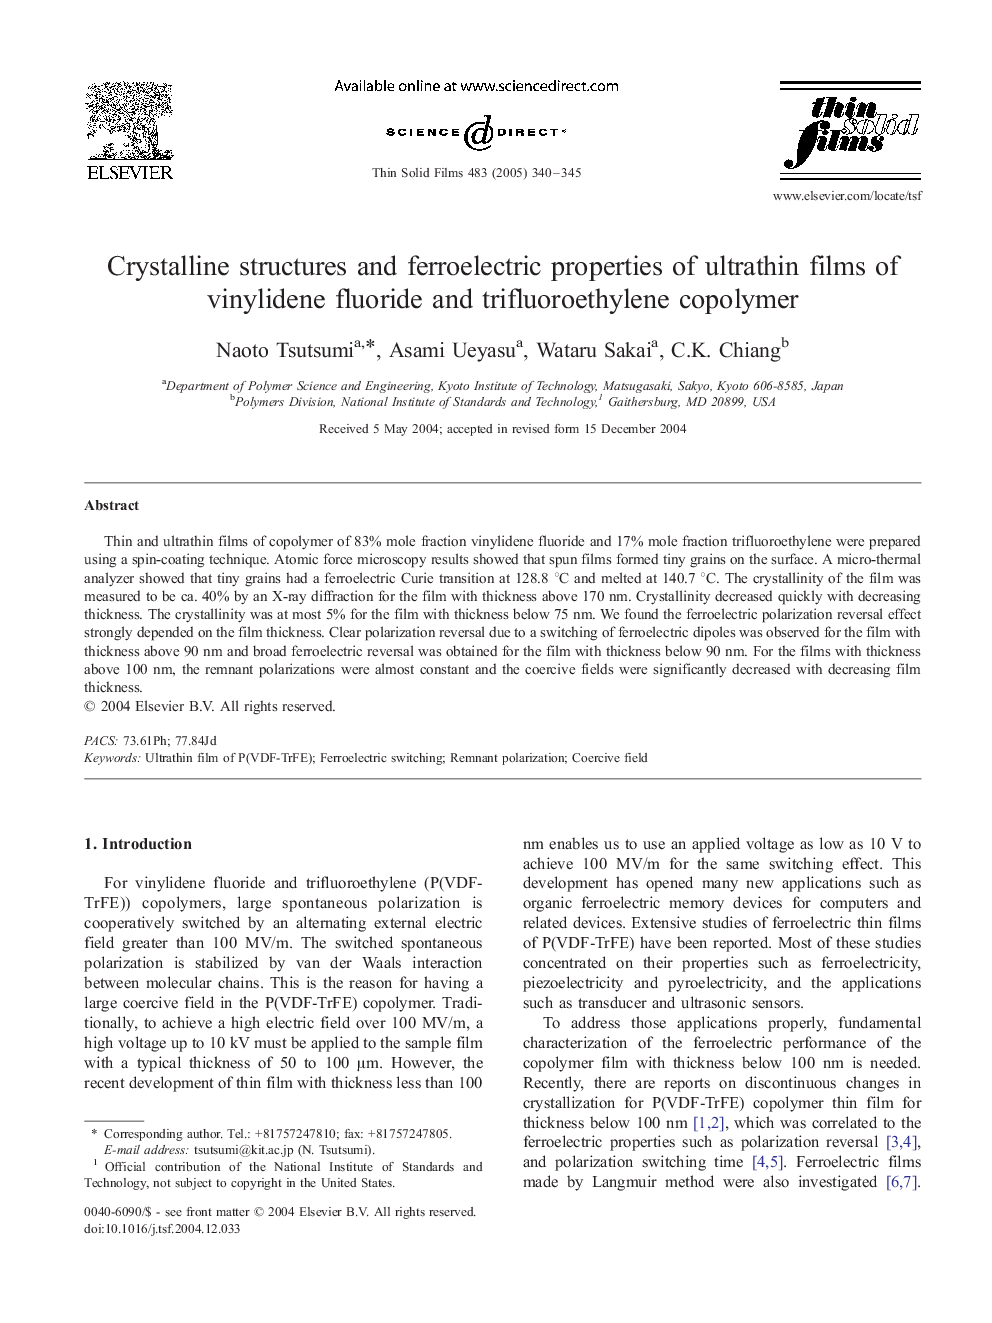 Crystalline structures and ferroelectric properties of ultrathin films of vinylidene fluoride and trifluoroethylene copolymer